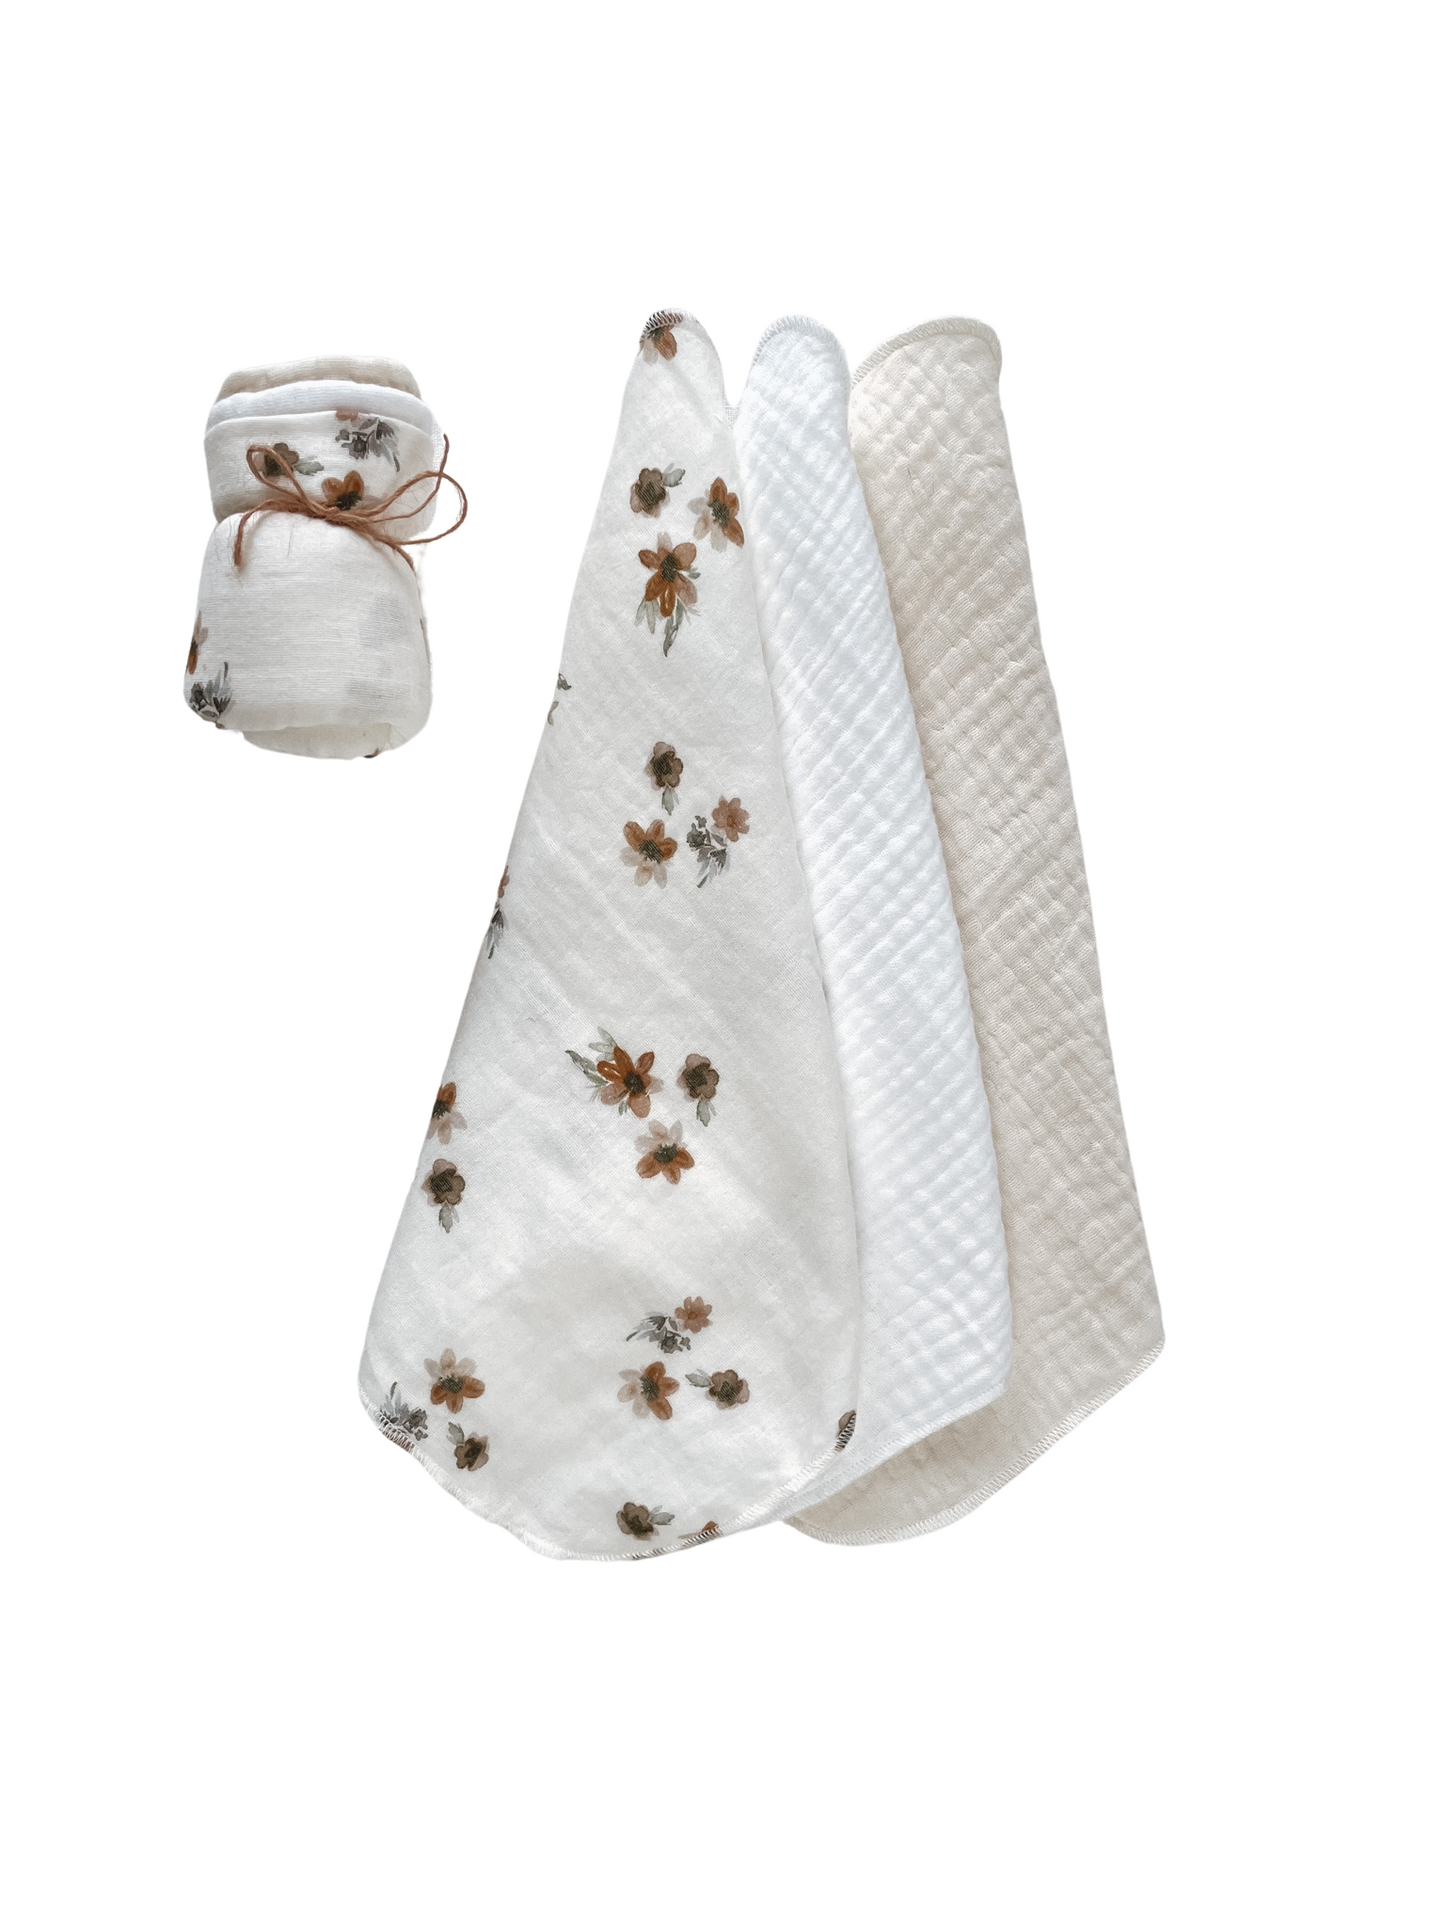 Muslin Burp cloth set / vintage floral - cream